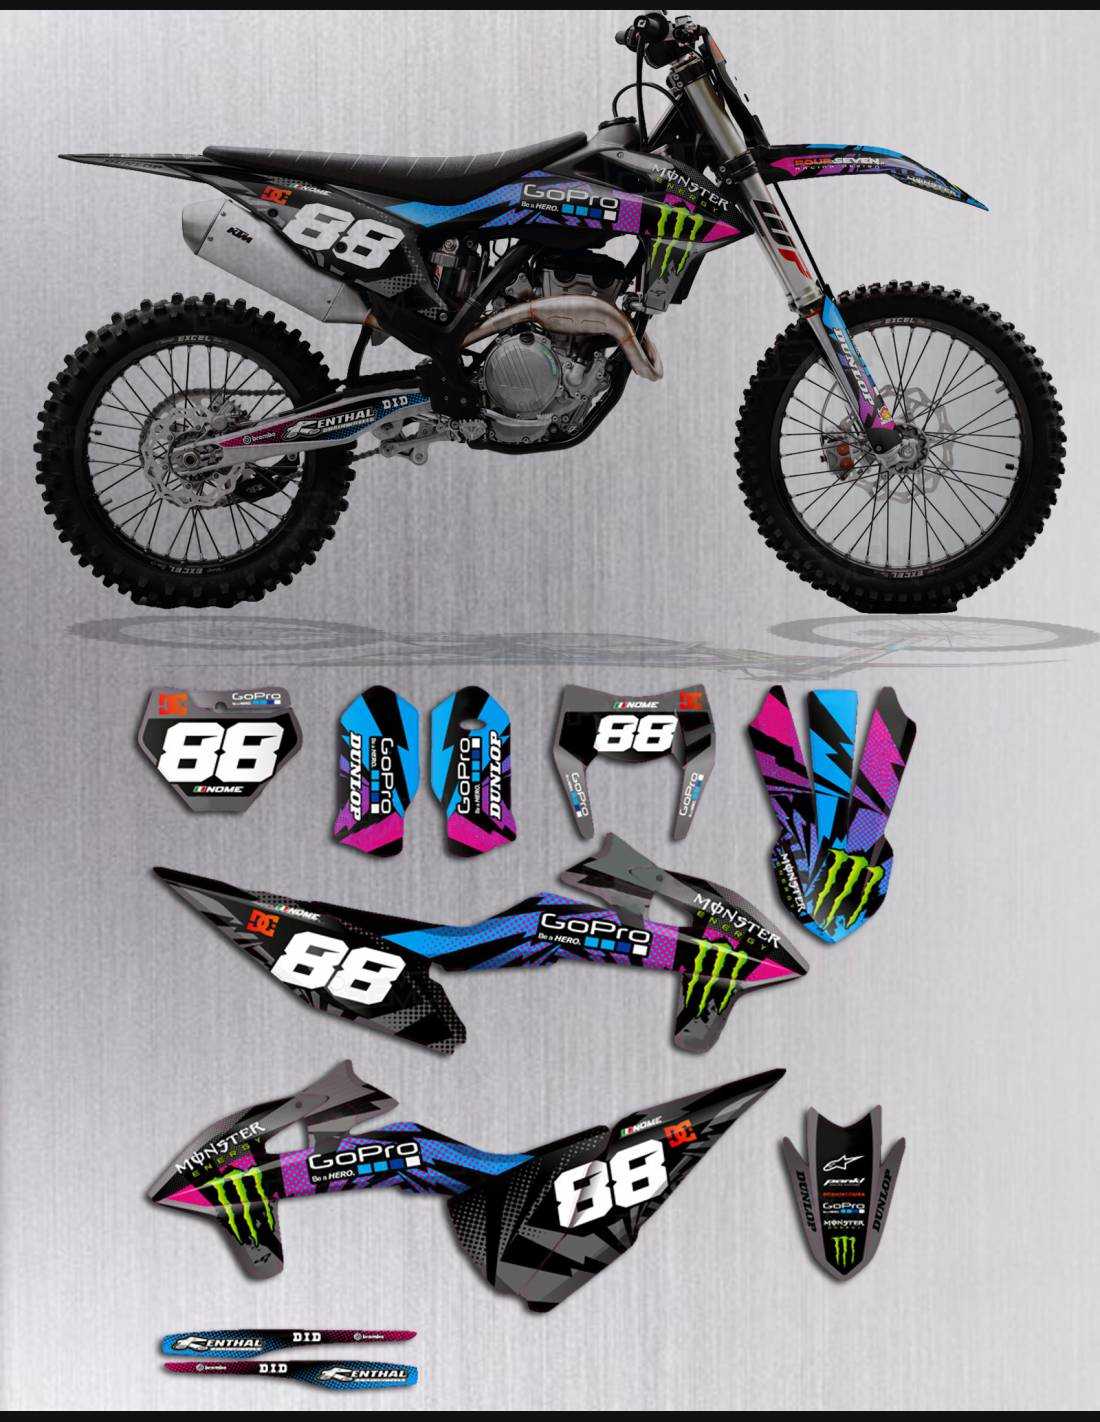 New Motocross Enduro Sticker Decal Kit Motorcycle Quad PW LT KX65 CR85 SX65 YZ85 